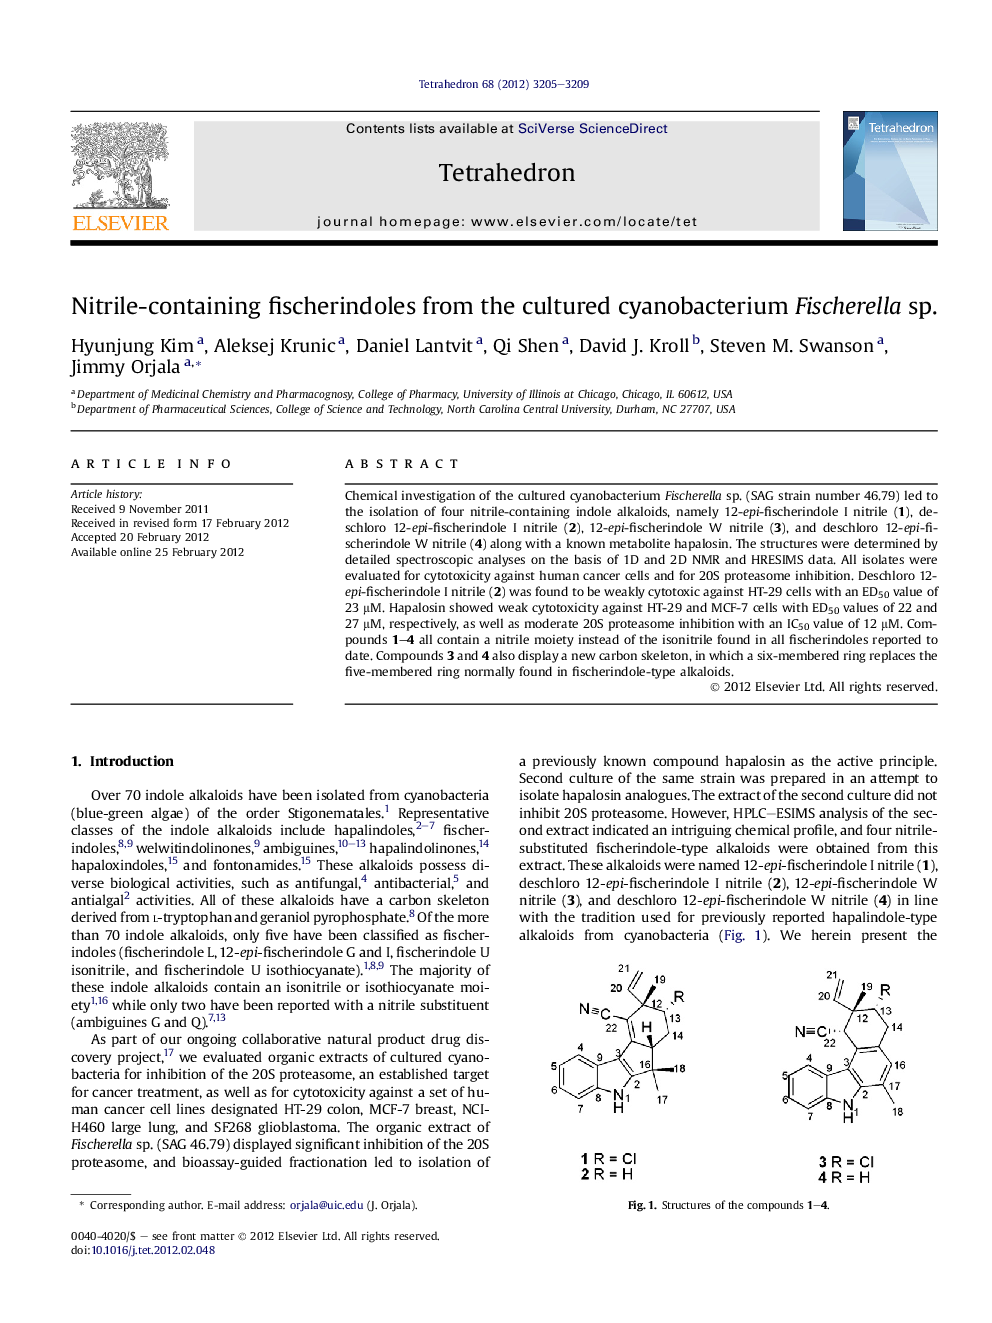 Nitrile-containing fischerindoles from the cultured cyanobacterium Fischerella sp.